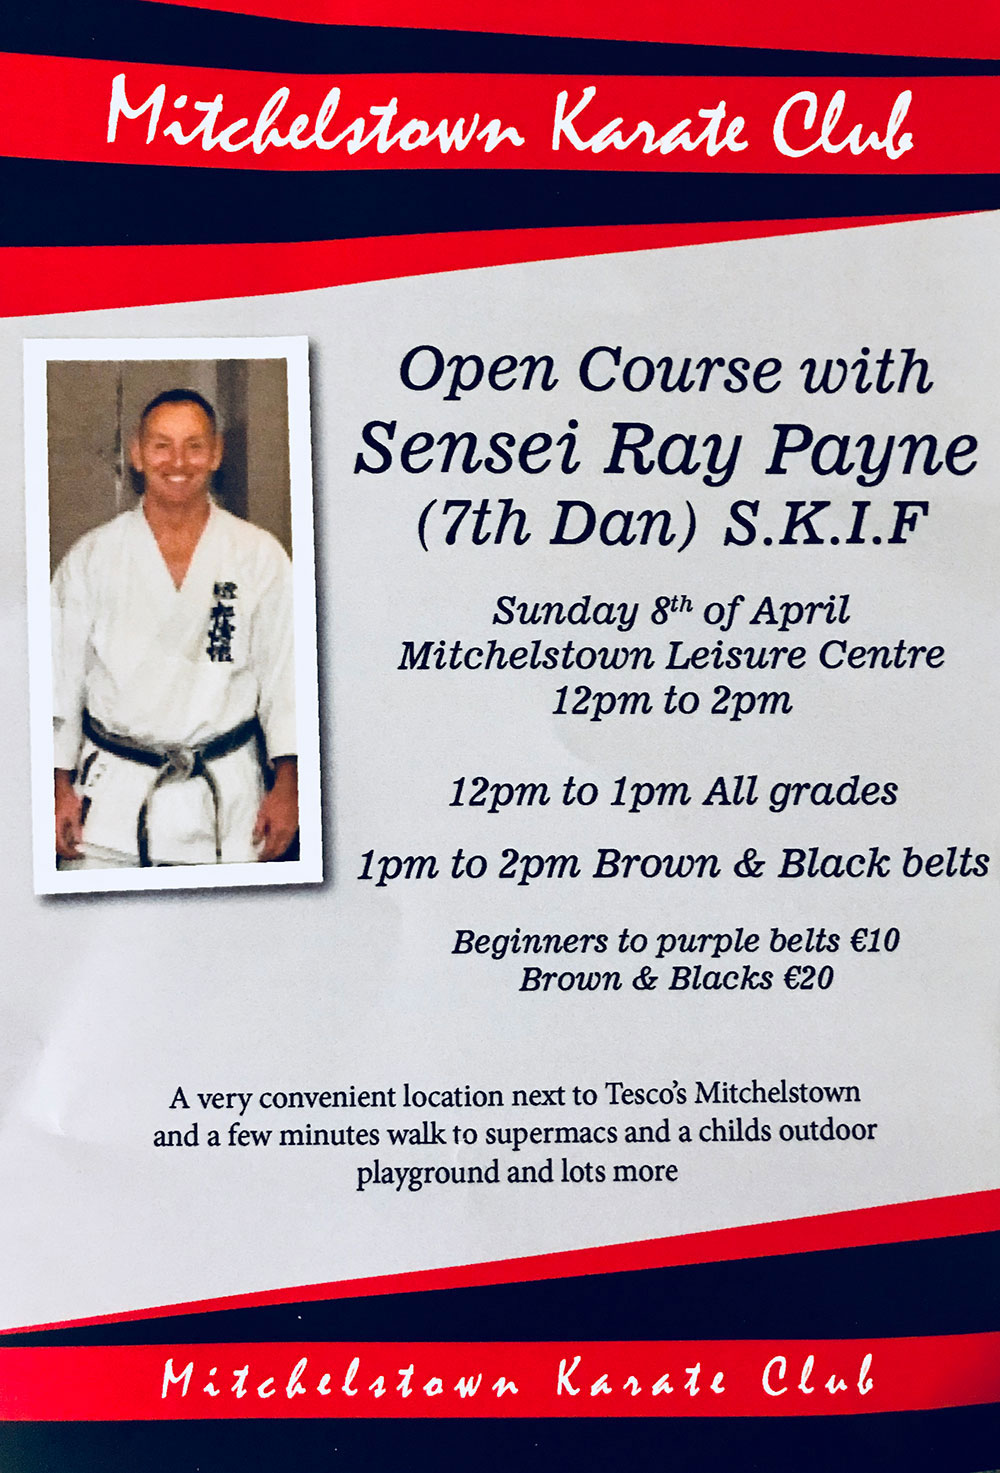 2018 Open Course with Sensei Ray Payne